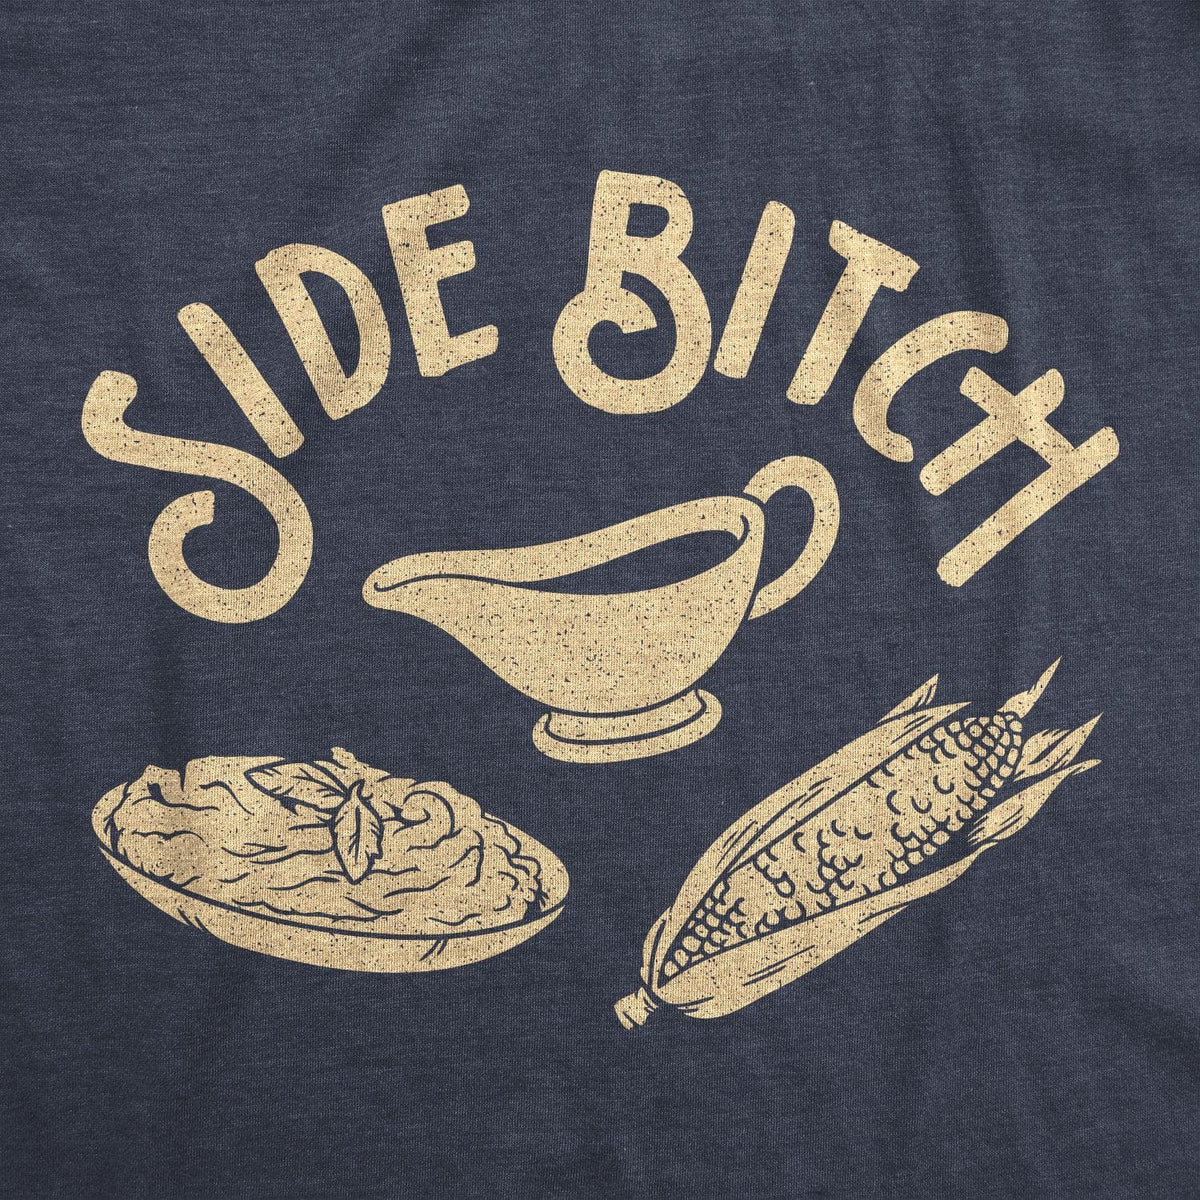 Side Bitch Men&#39;s Tshirt  -  Crazy Dog T-Shirts